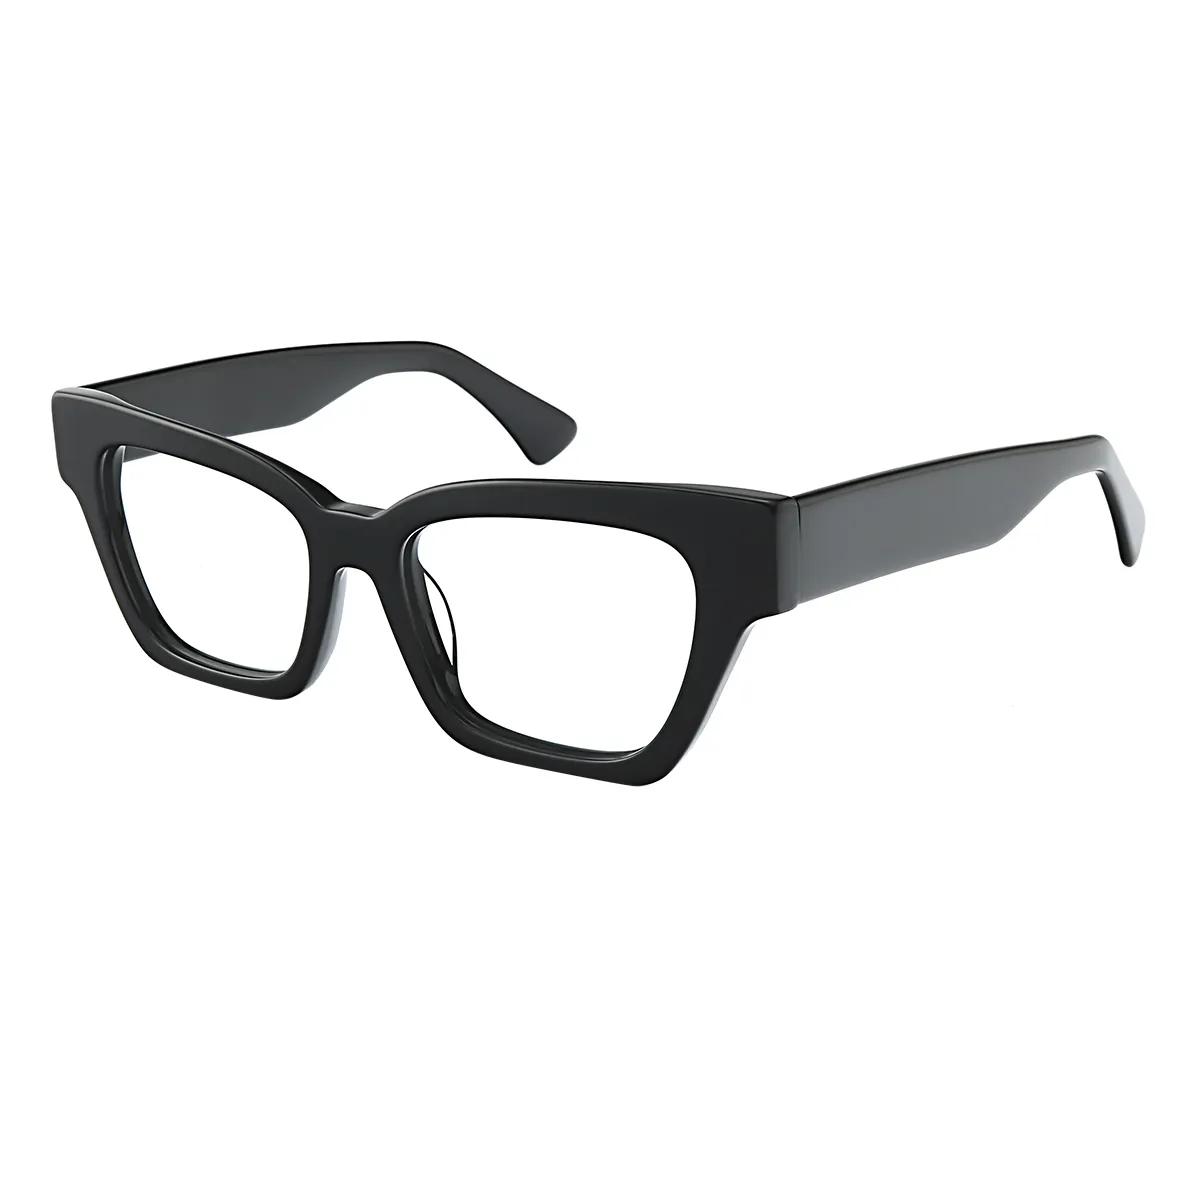 Alette - Square  Glasses for Women